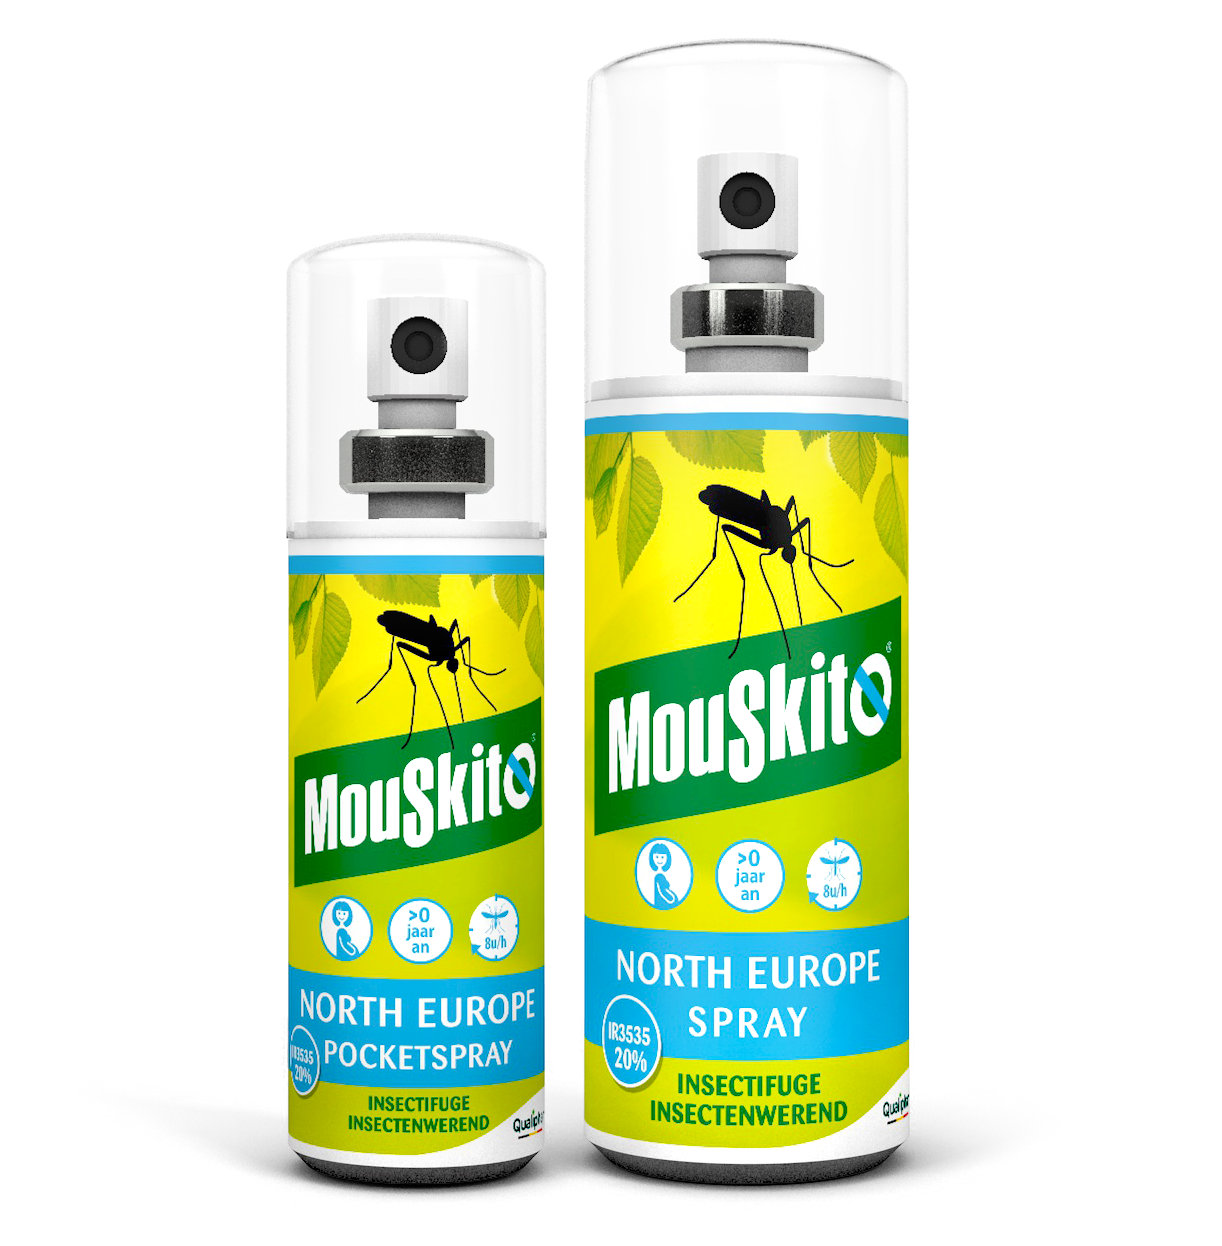 Mouskito® North Europe Spray & Pocketspray